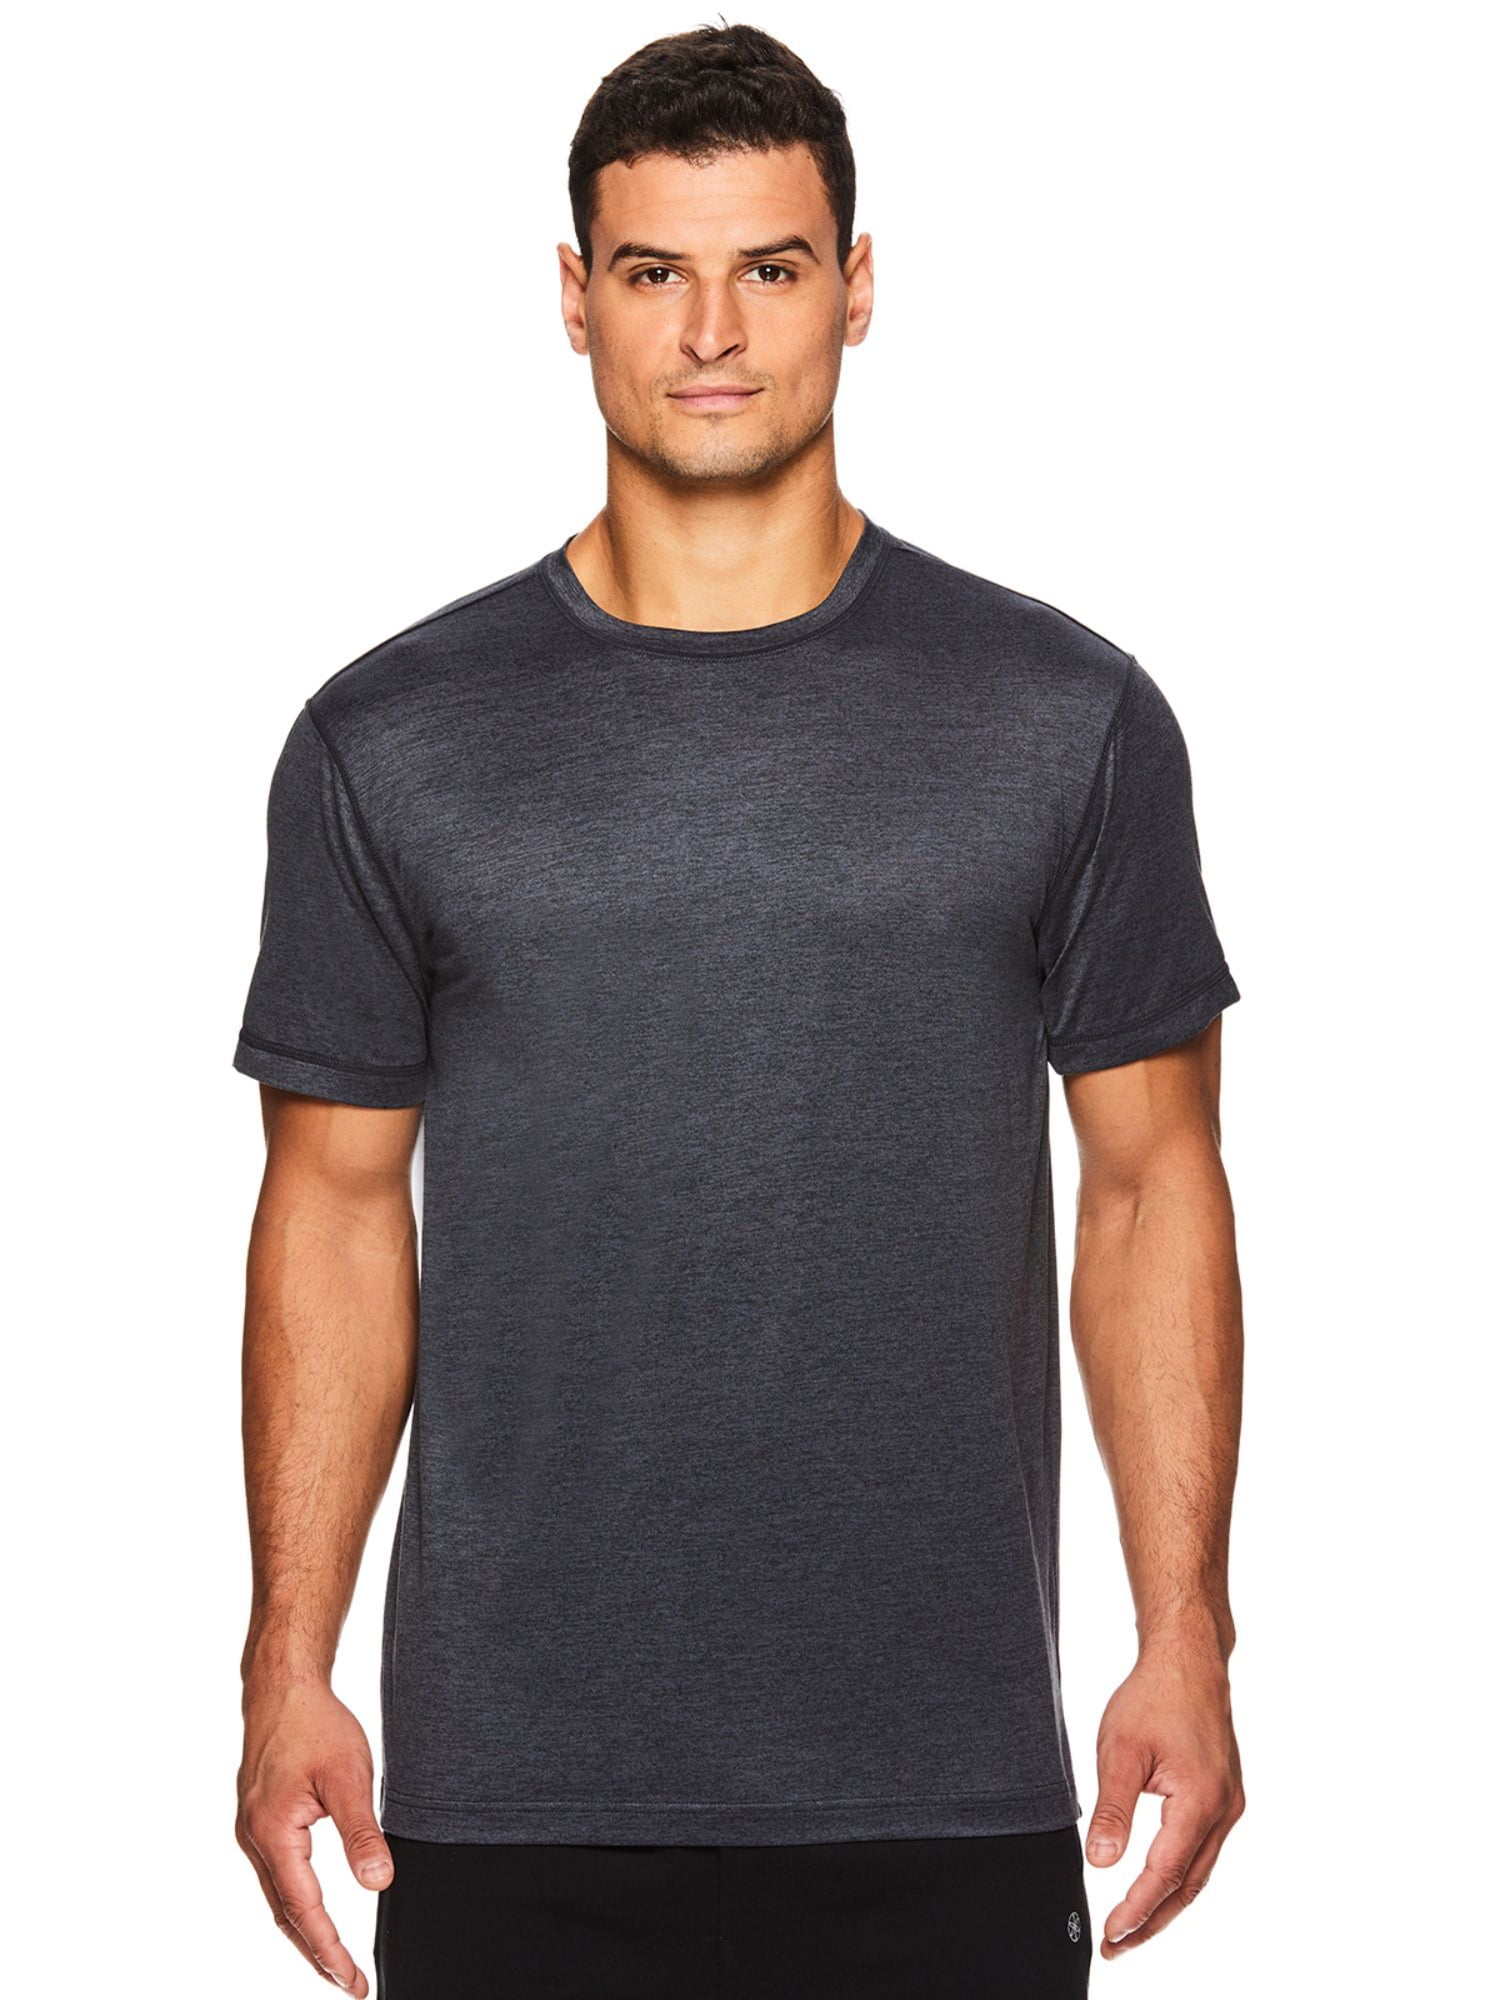 Gaiam Men's Everyday Basic Crew T-Shirt, Sizes S-XL - Walmart.com